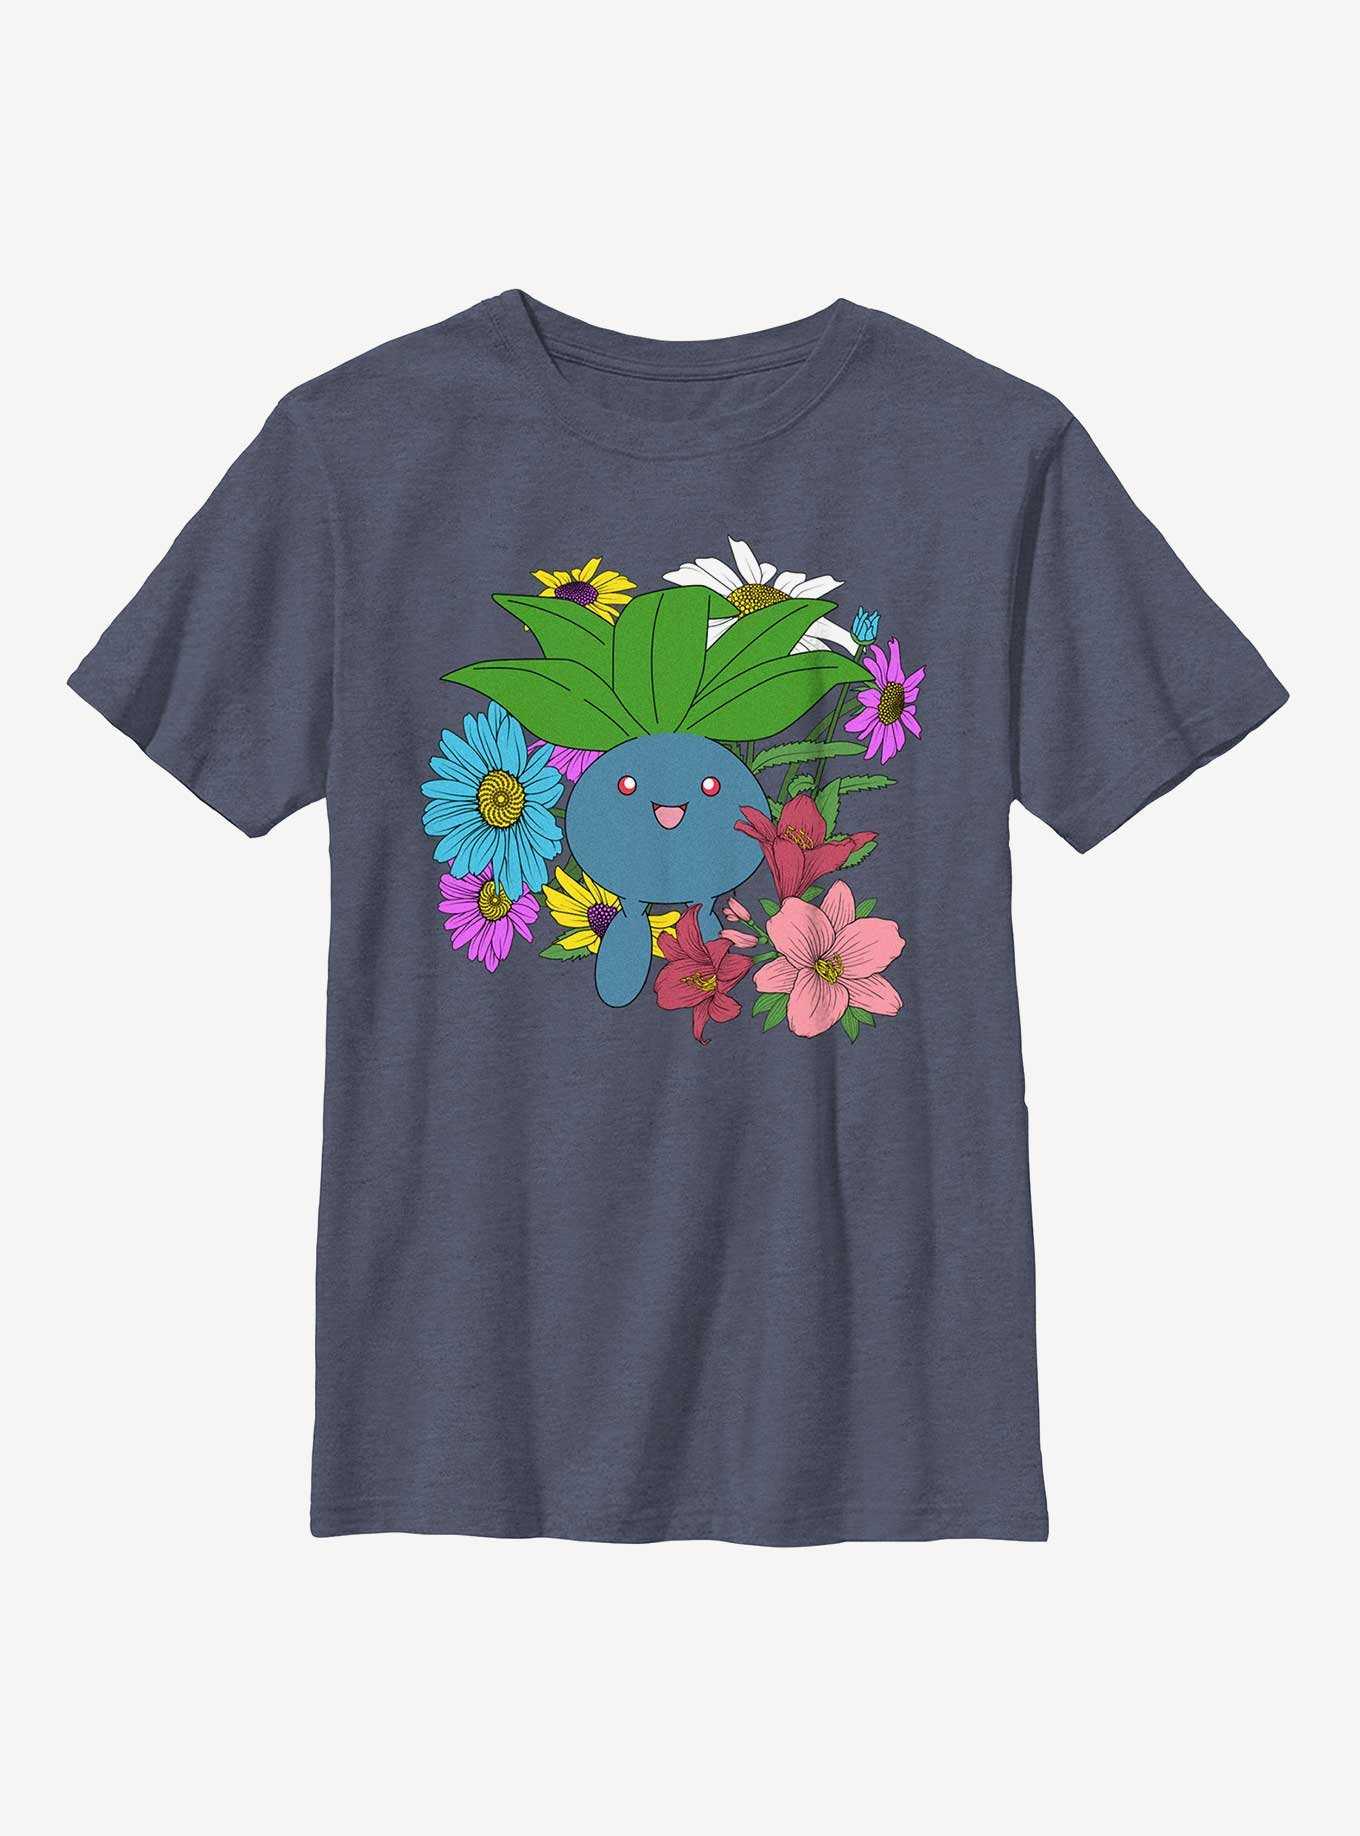 Pokemon Oddish Flowers Youth T-Shirt, , hi-res